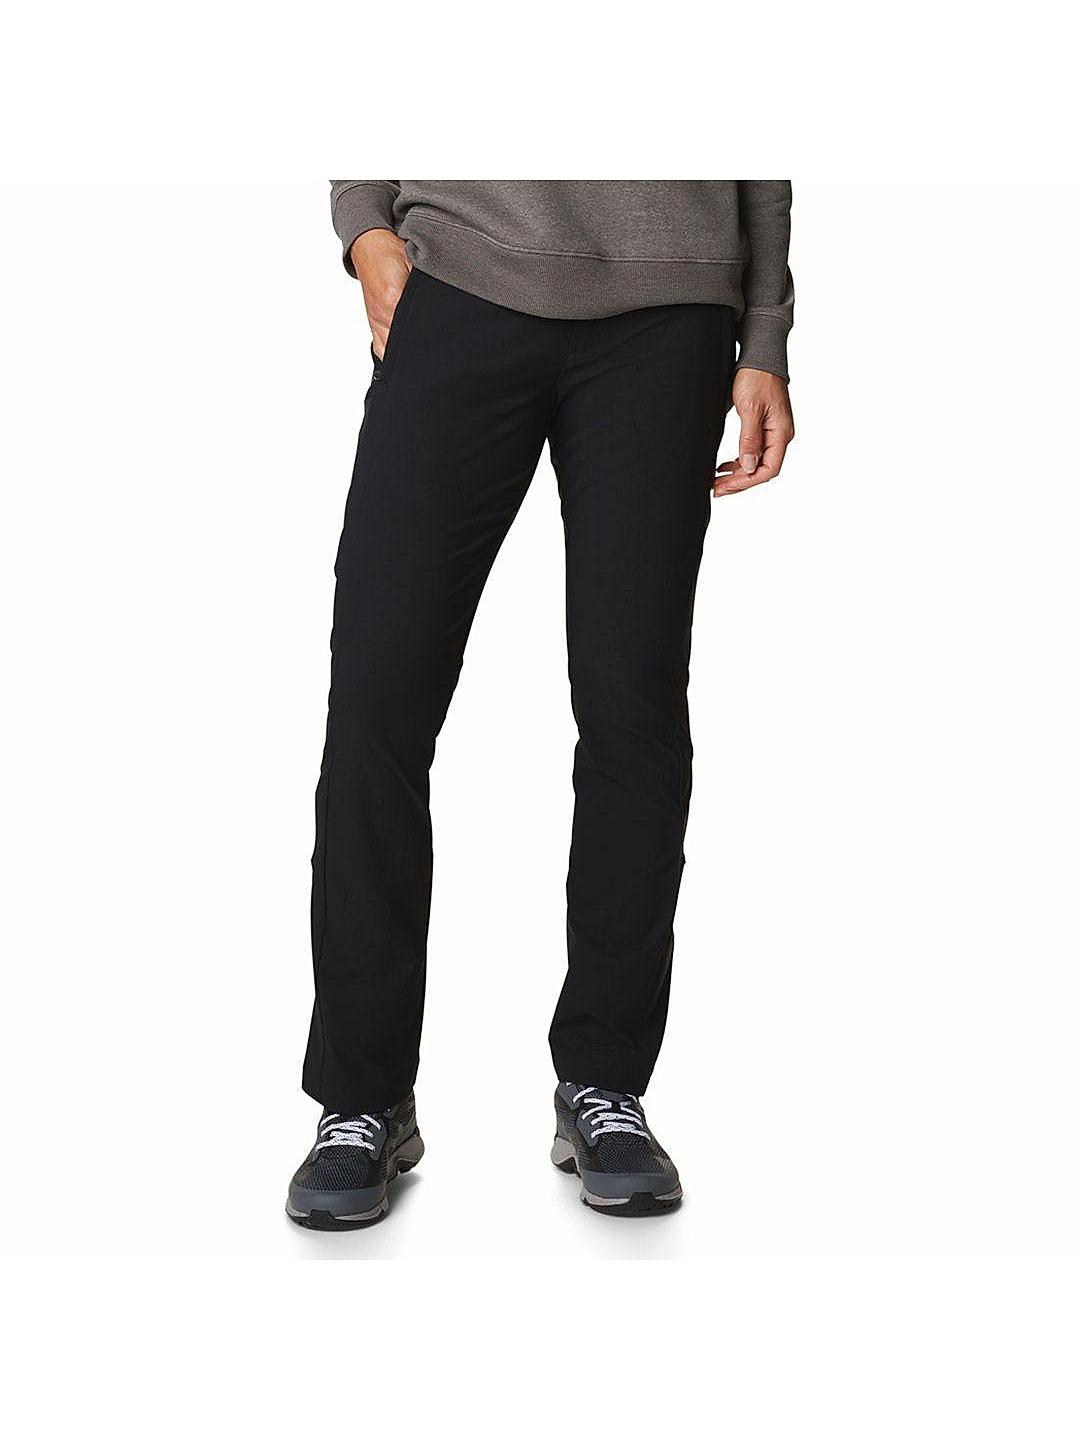 Buy Grey Trousers  Pants for Women by Columbia Online  Ajiocom